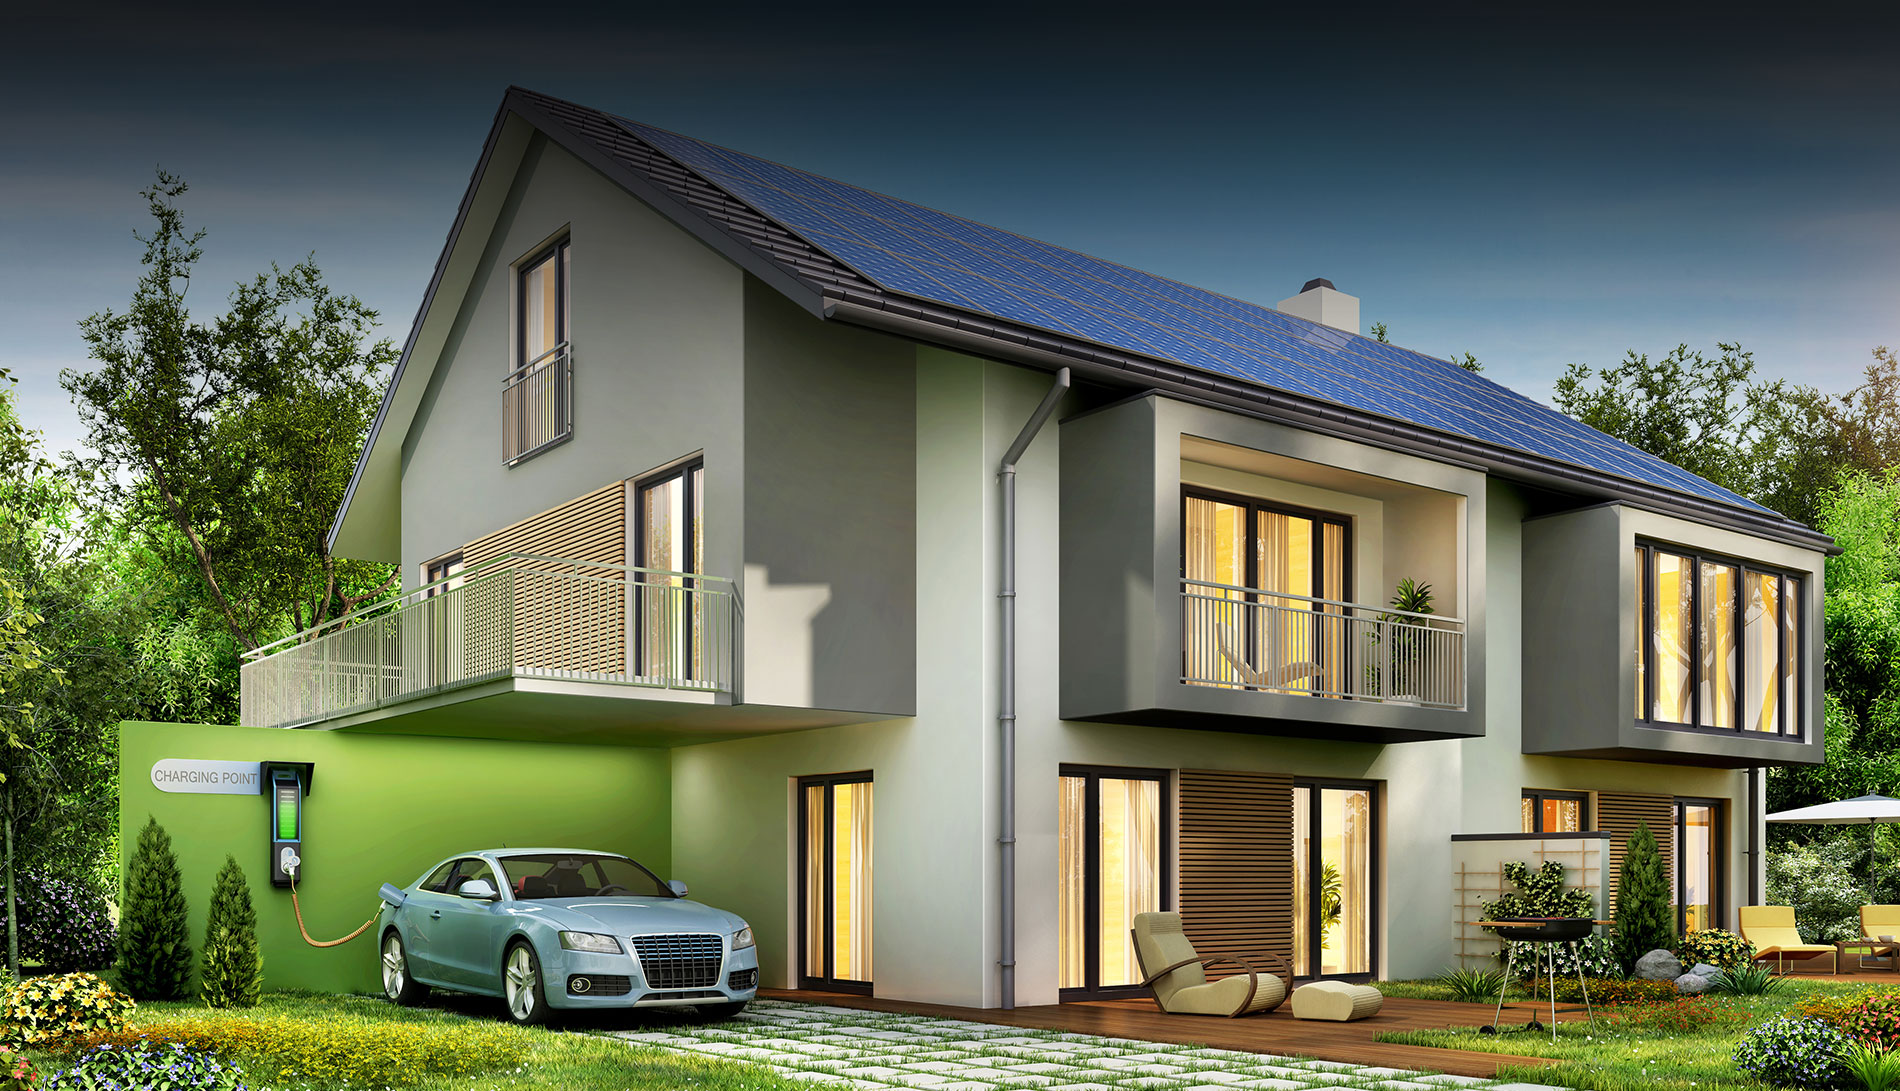 Whole Home Solar